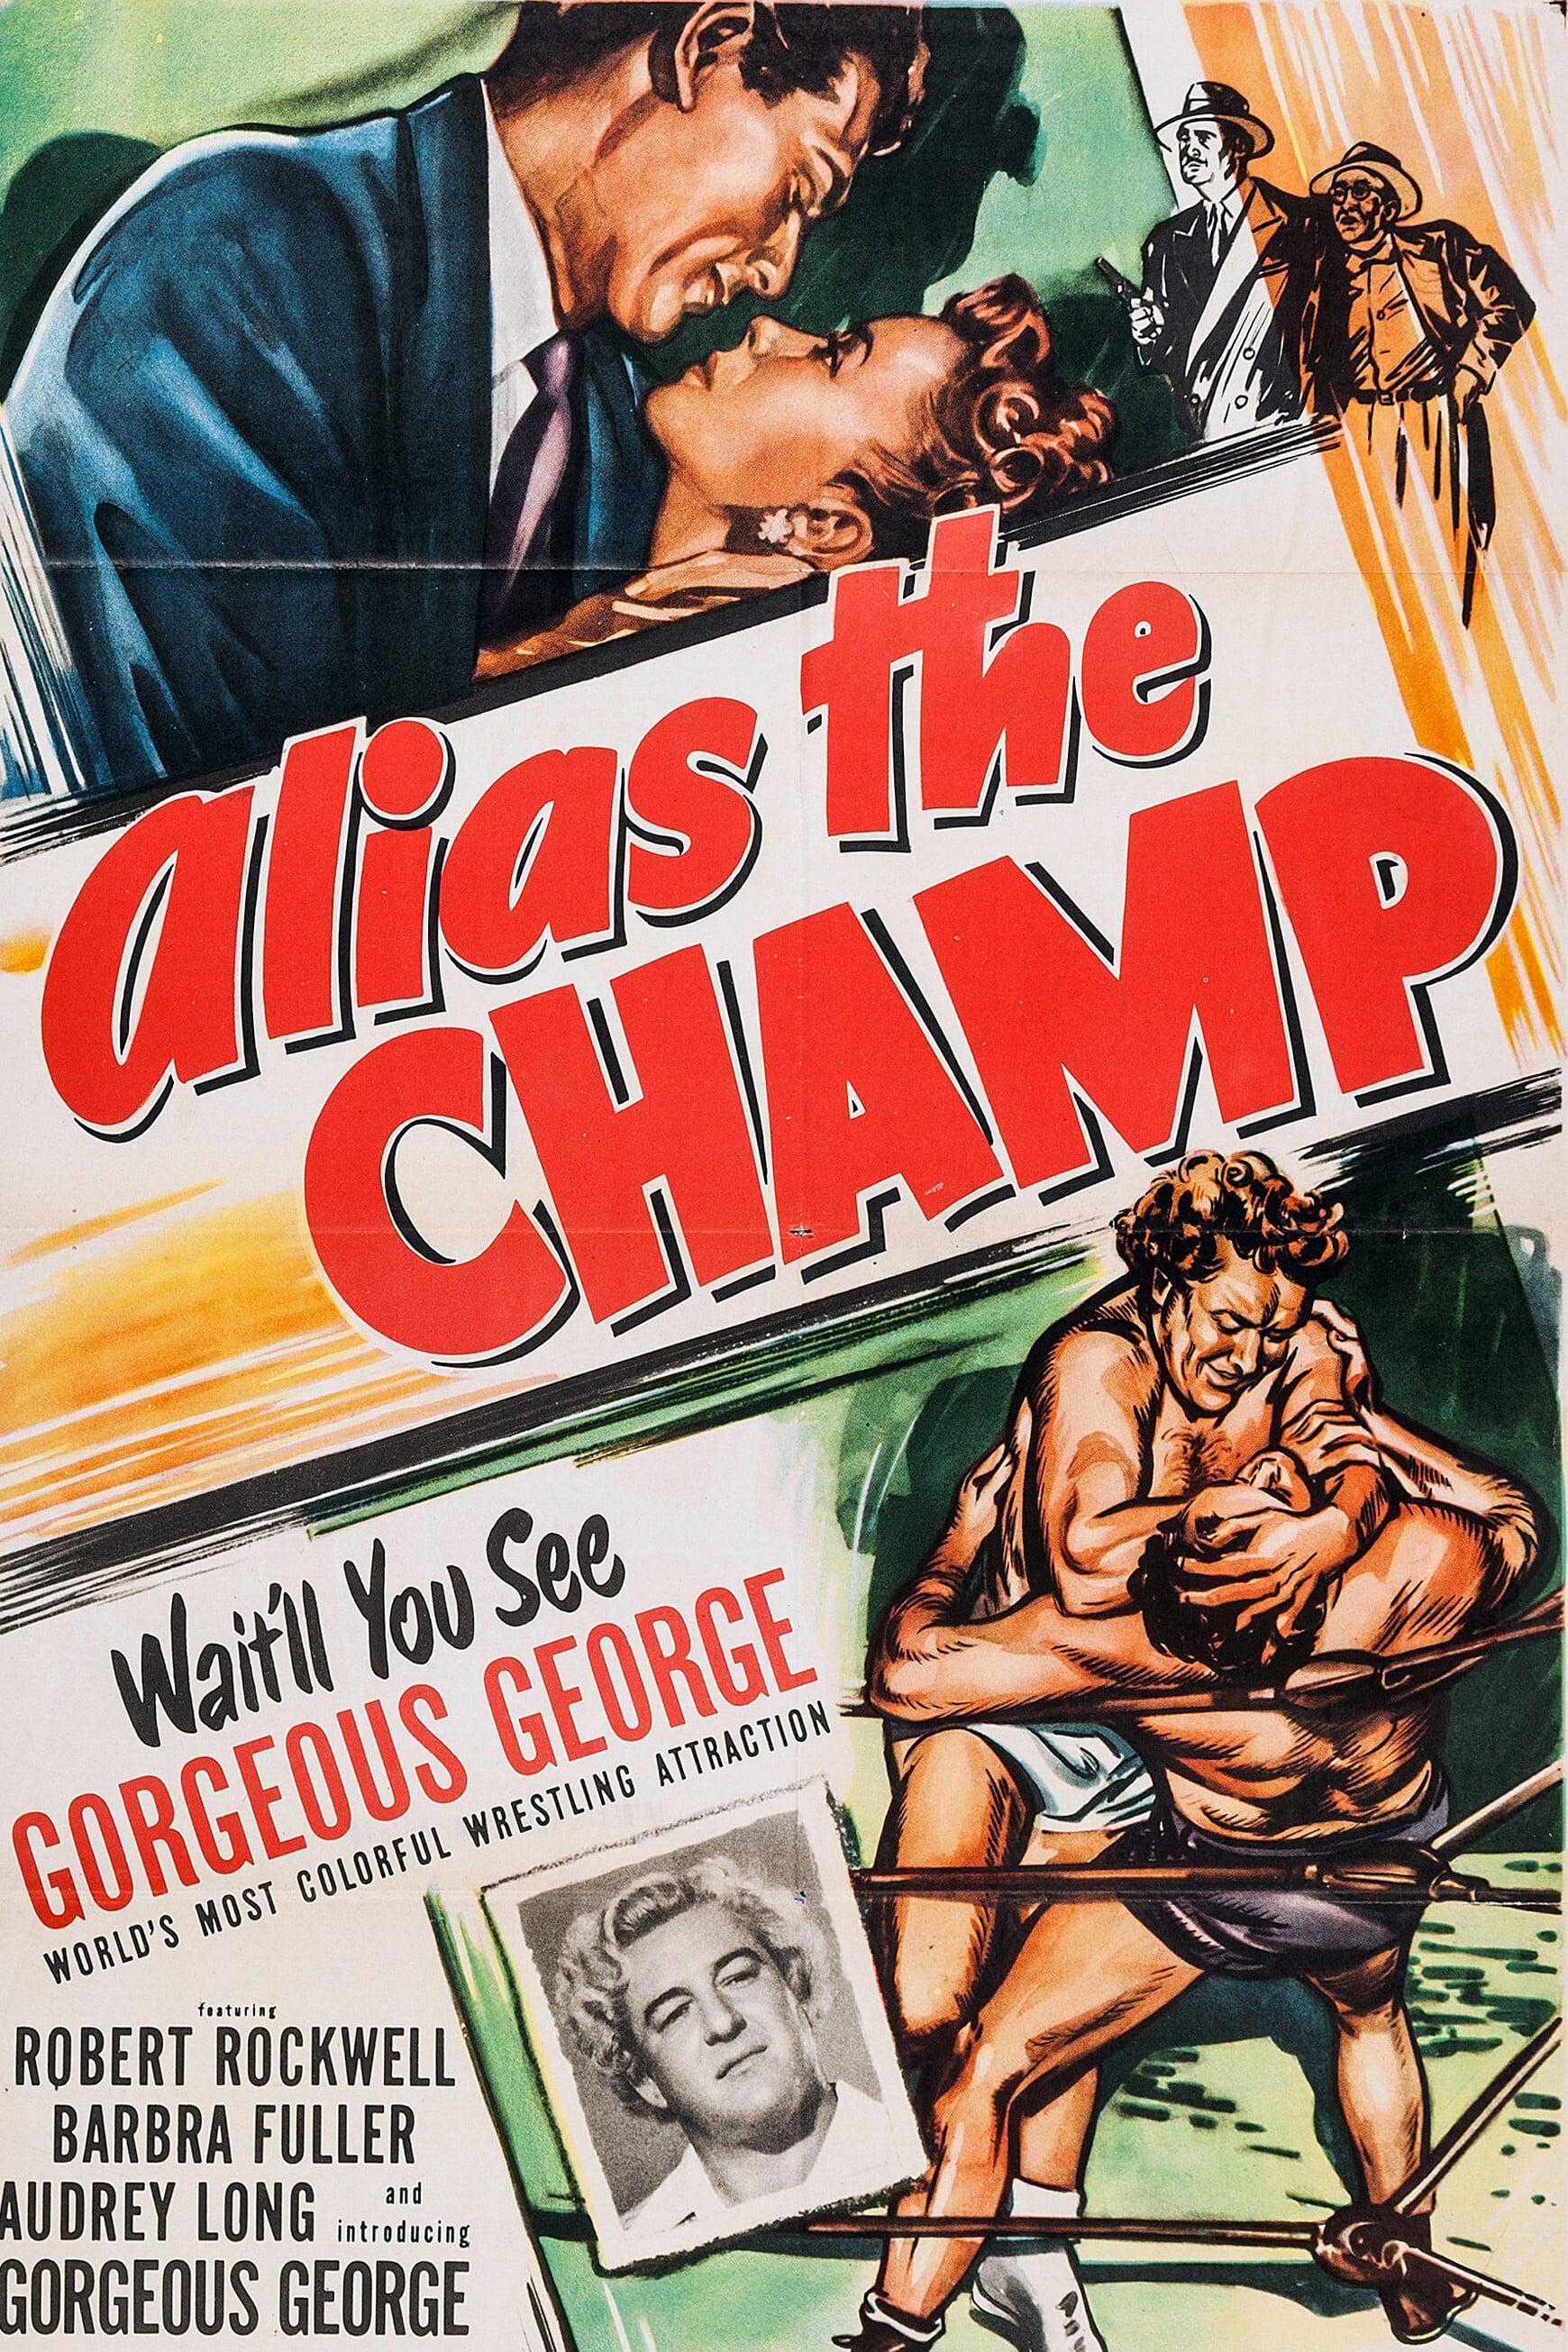 Alias the Champ poster